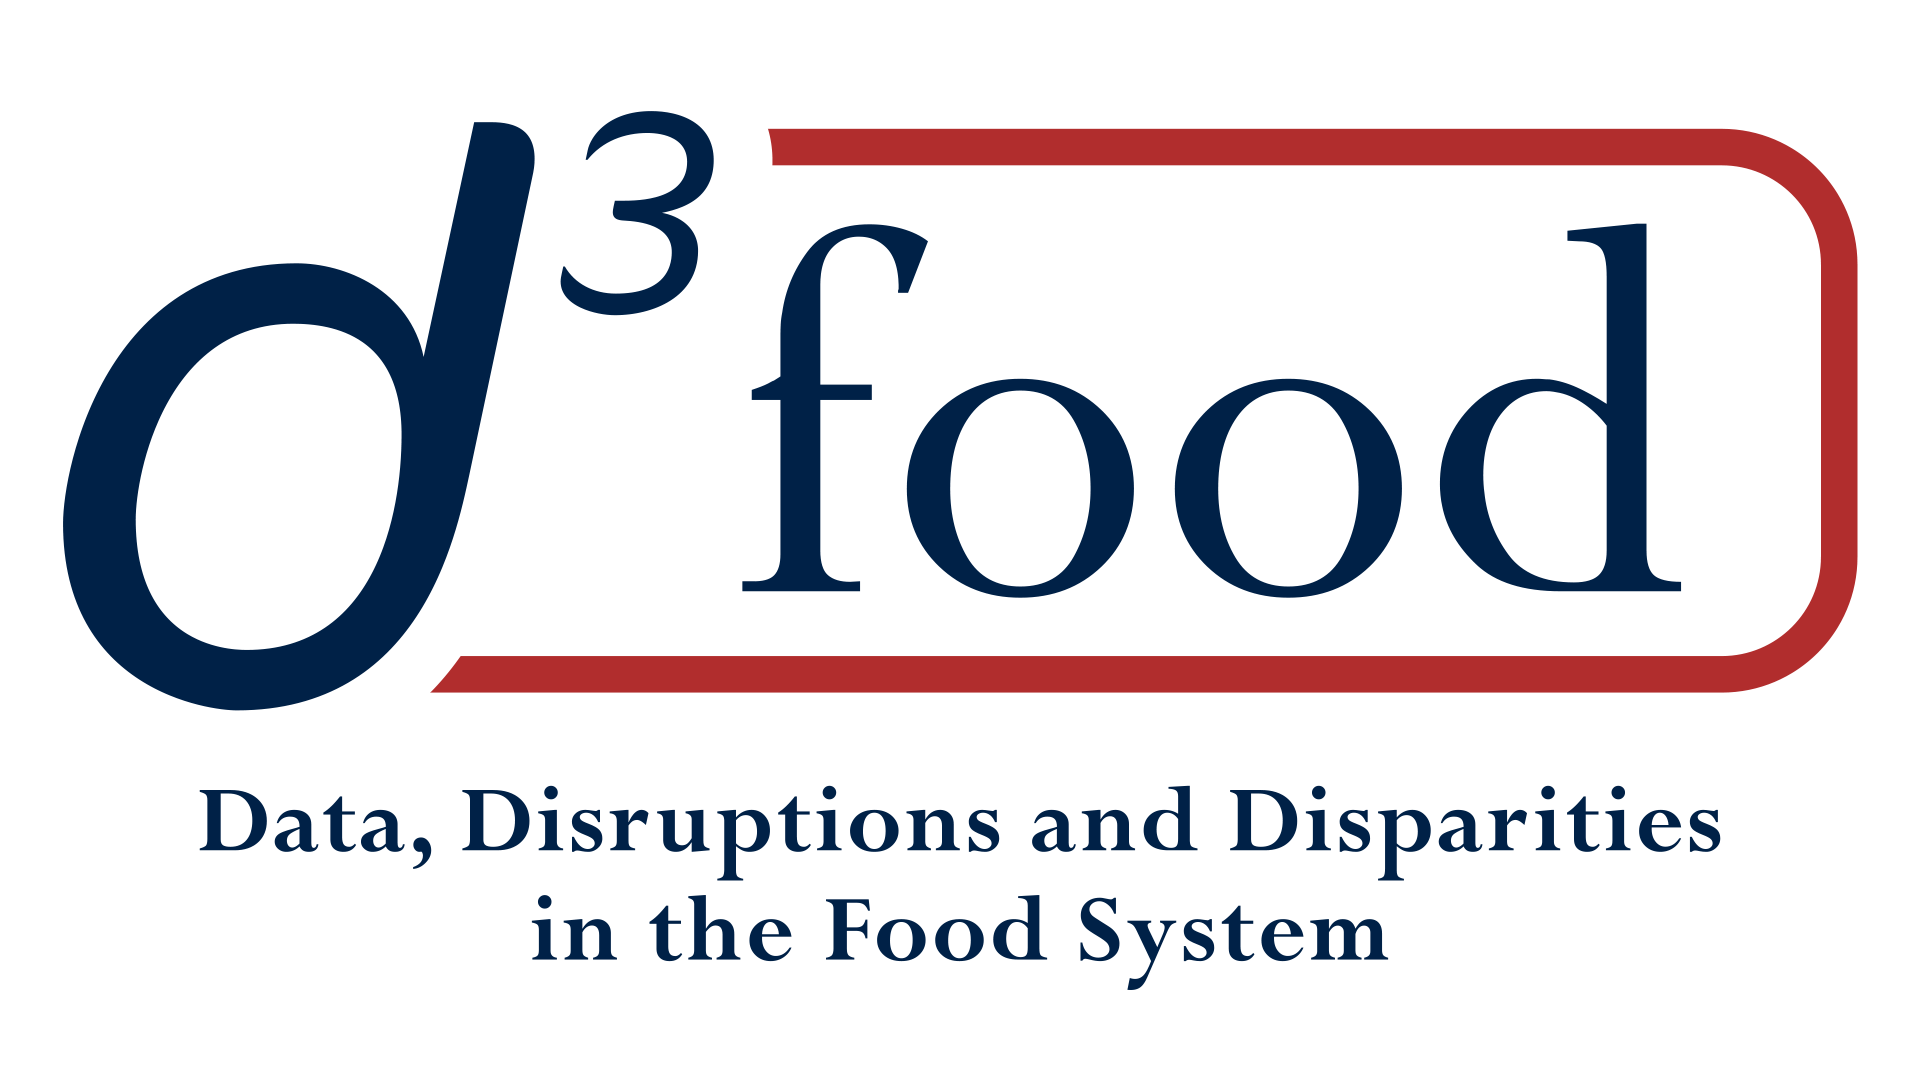 d3food logo